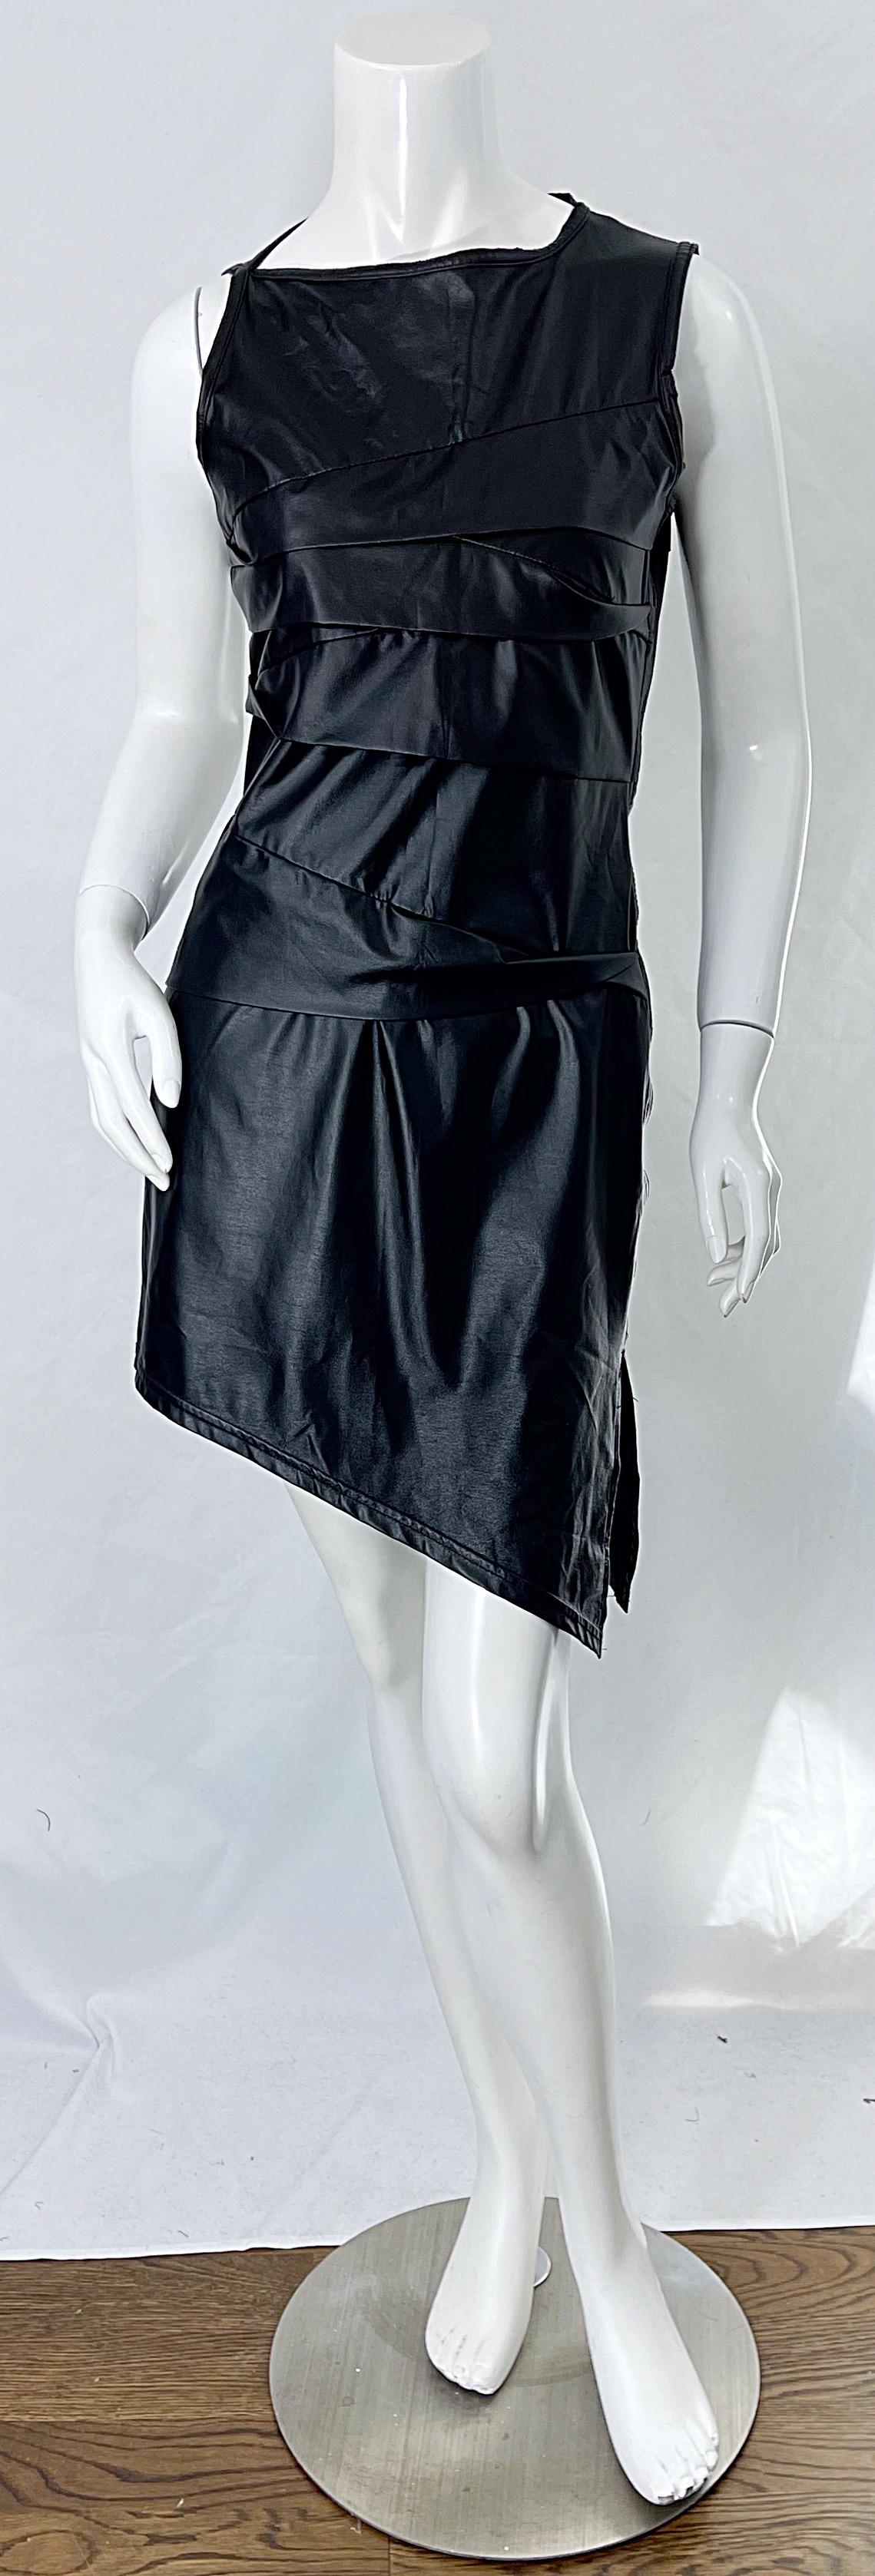 1990s Dexter Wong Club Kid Rave Japanese Black Pleather Vintage 90s Mini Dress For Sale 7